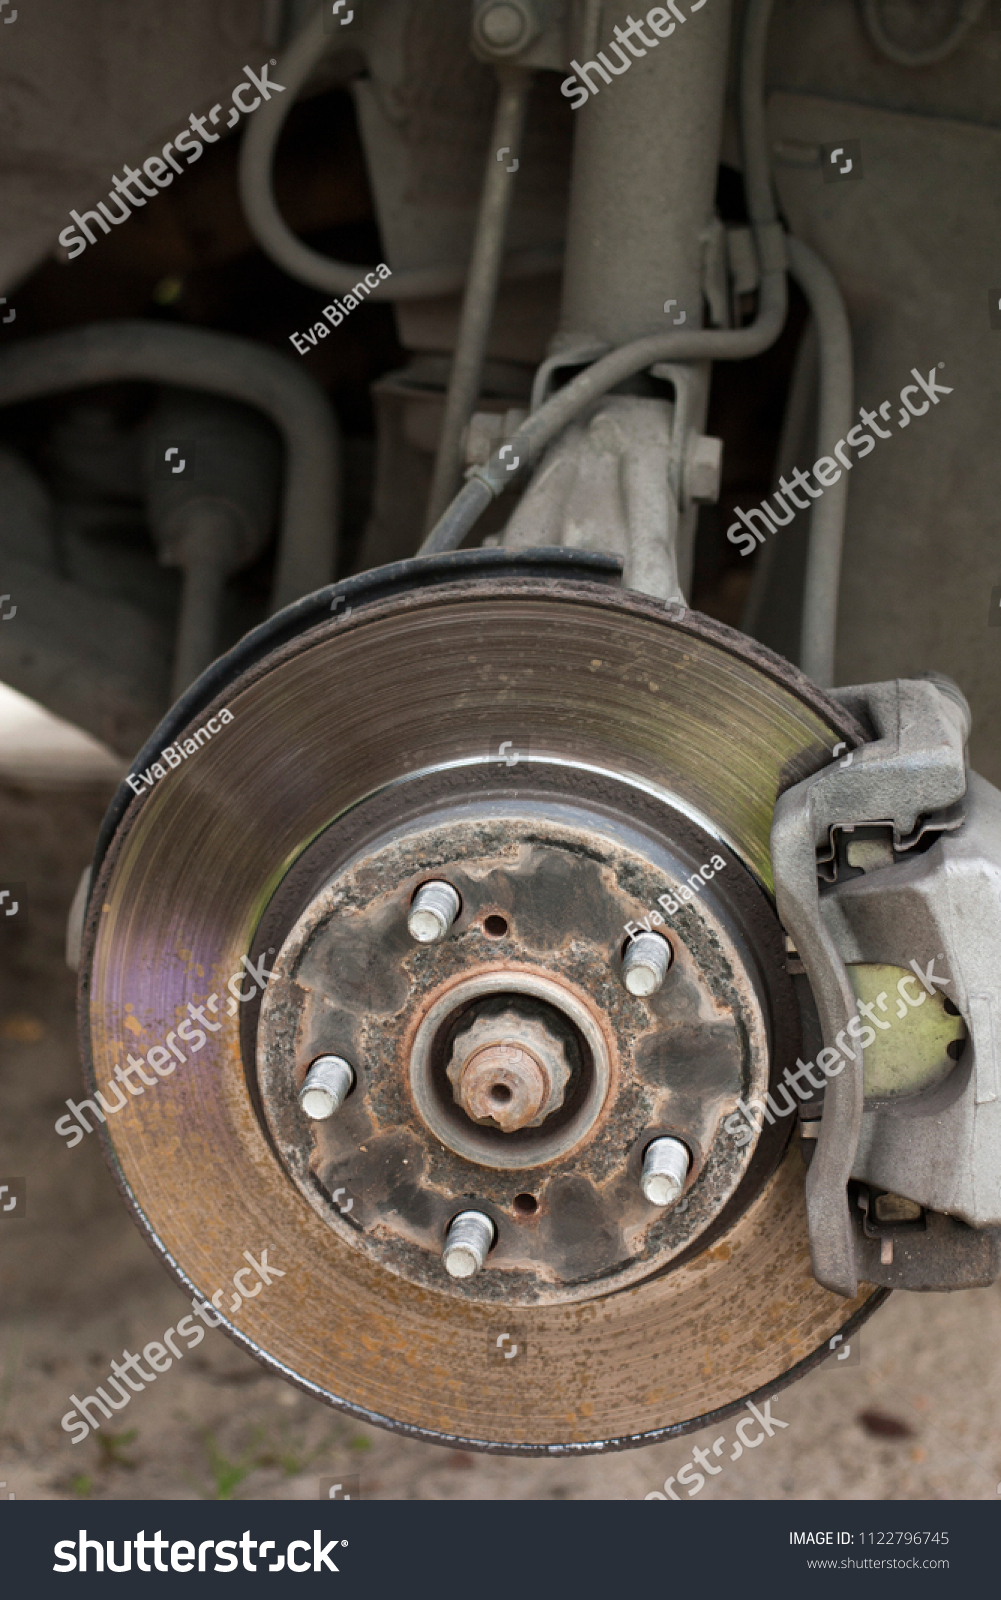 Brake disk of a car. #1122796745